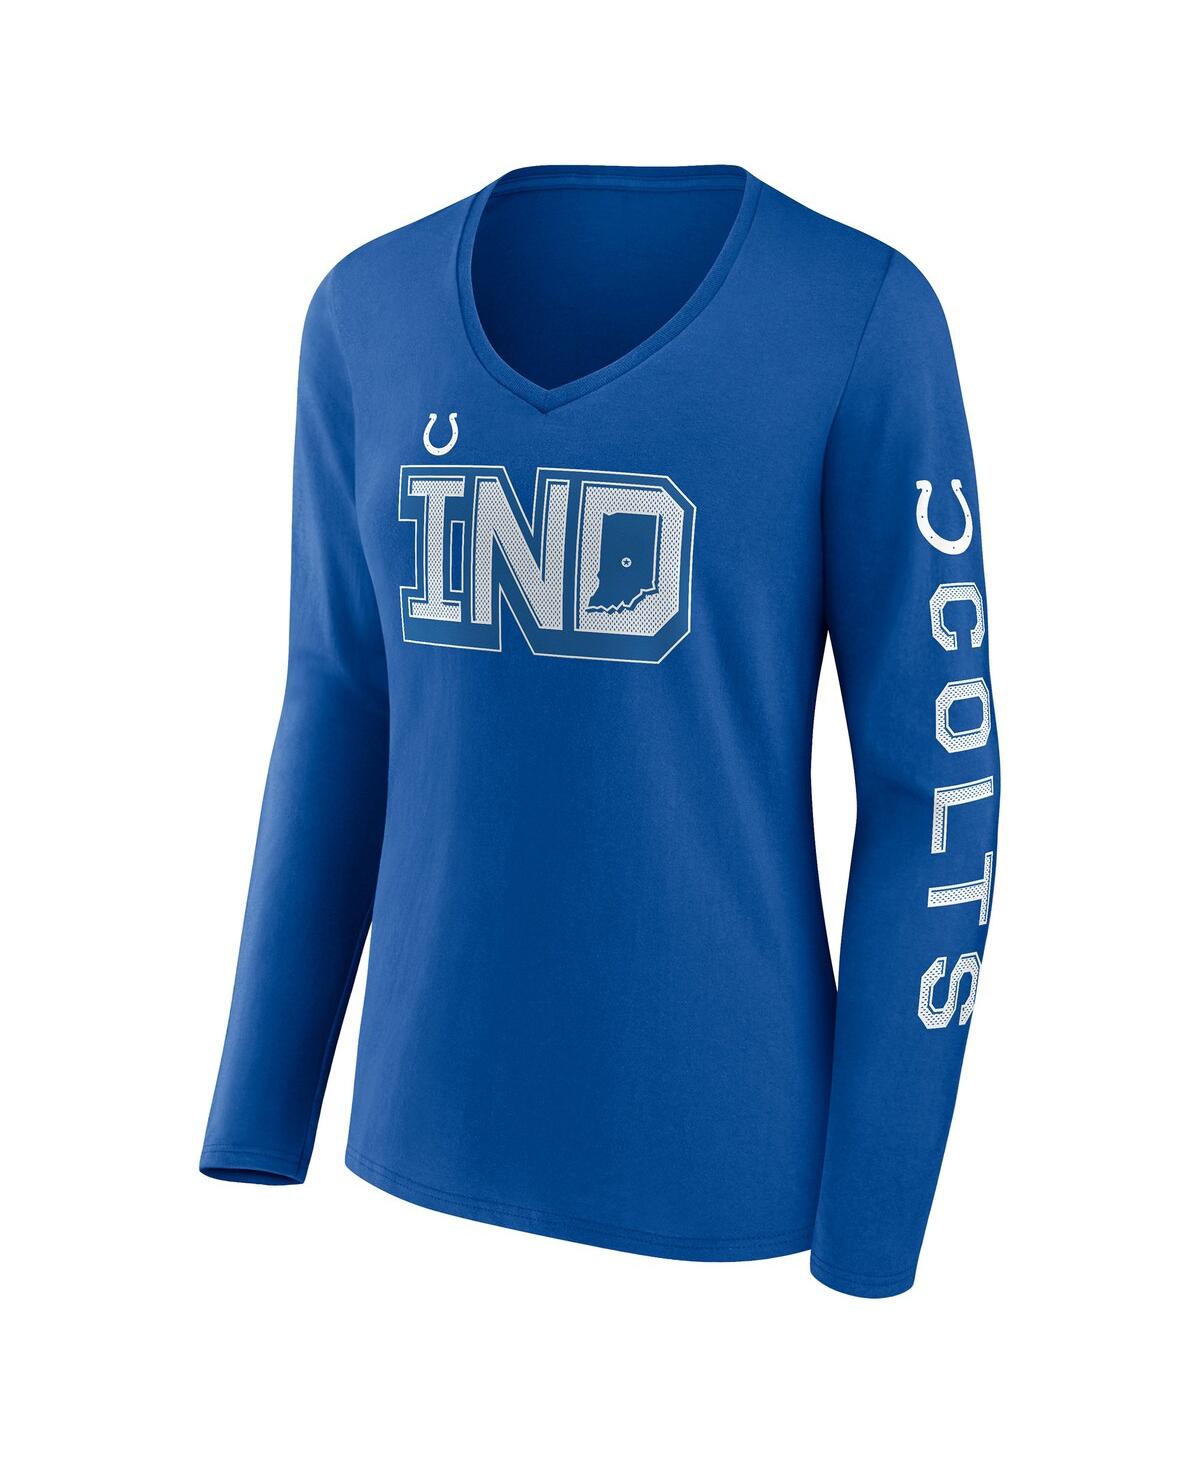 Fanatics Women's Royal Chicago Cubs Core Team Lockup Long Sleeve V-Neck T-Shirt